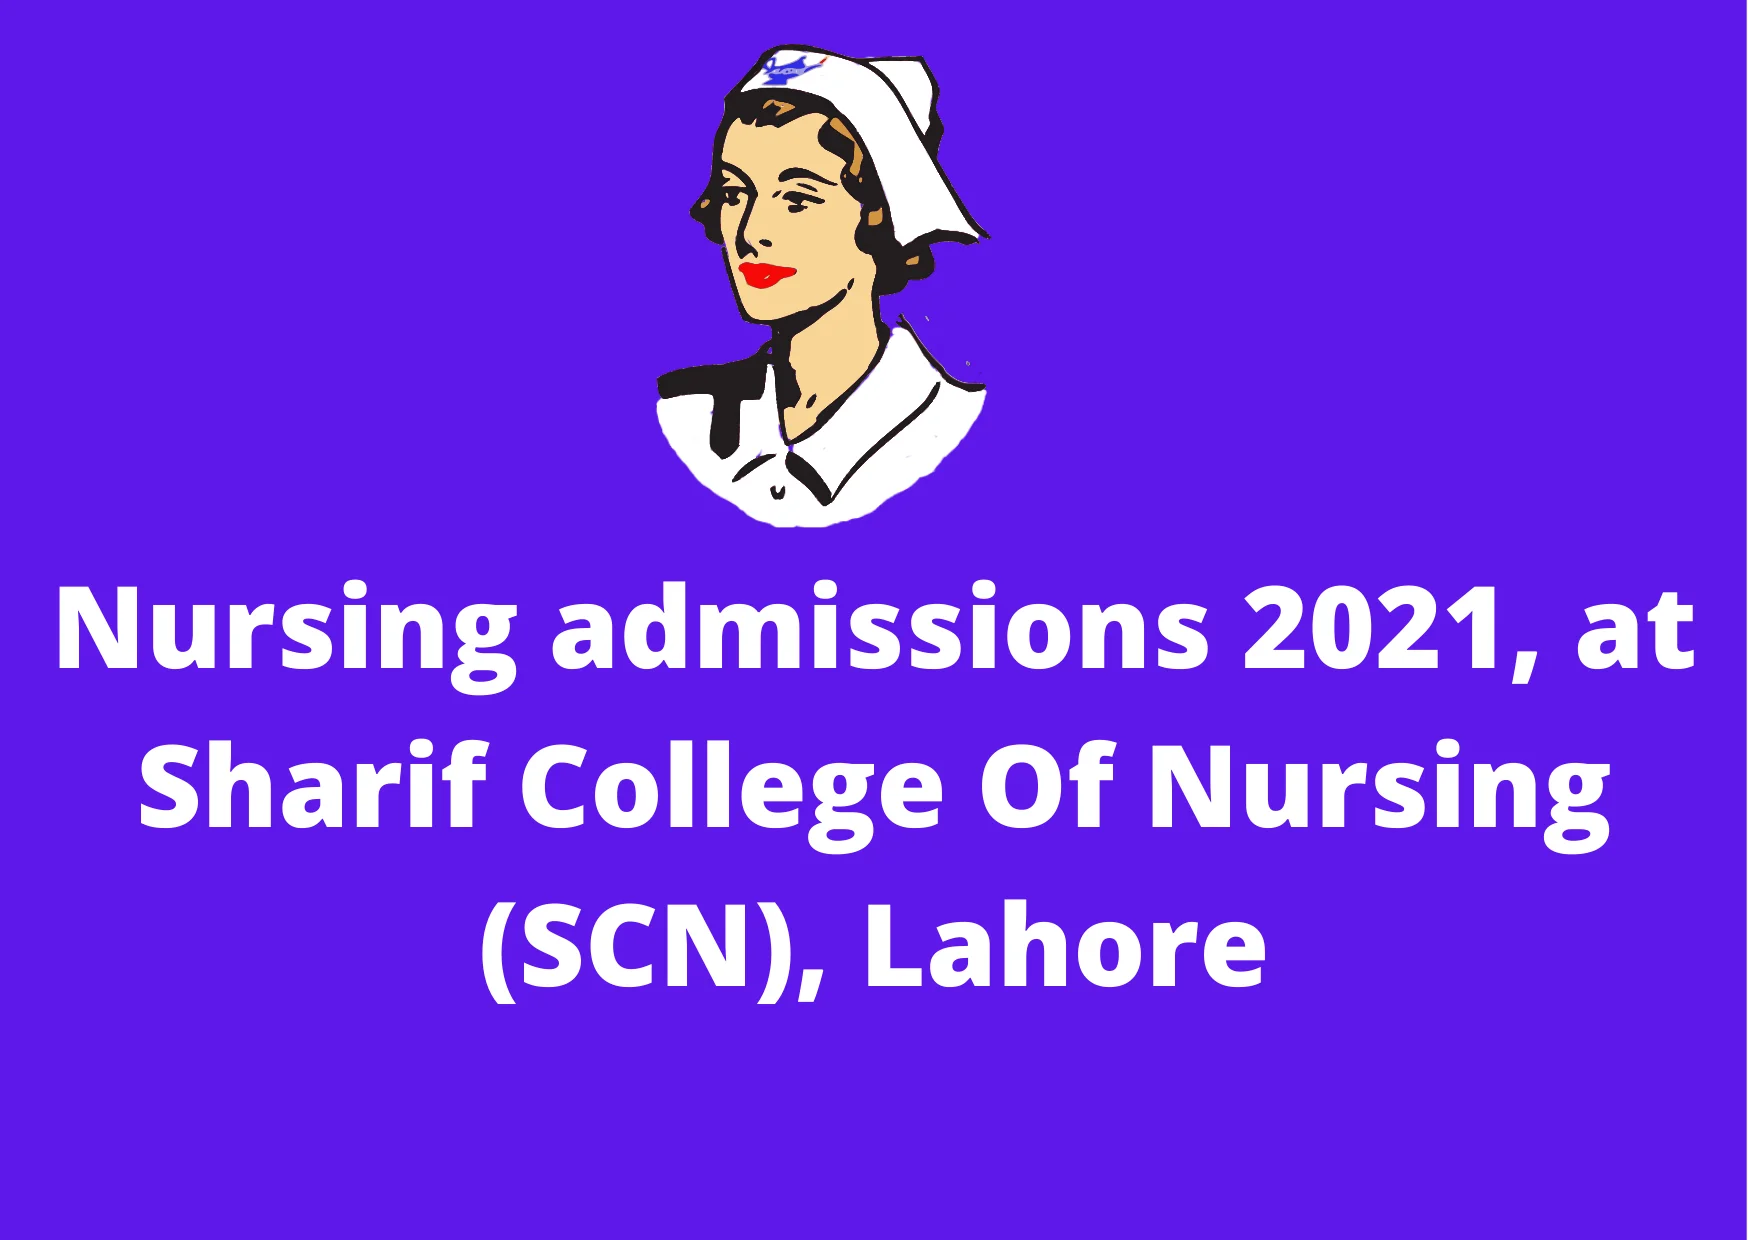 Nursing-admissions-2021-at-Sharif-College-Of-Nursing-SCN-Lahore.webp